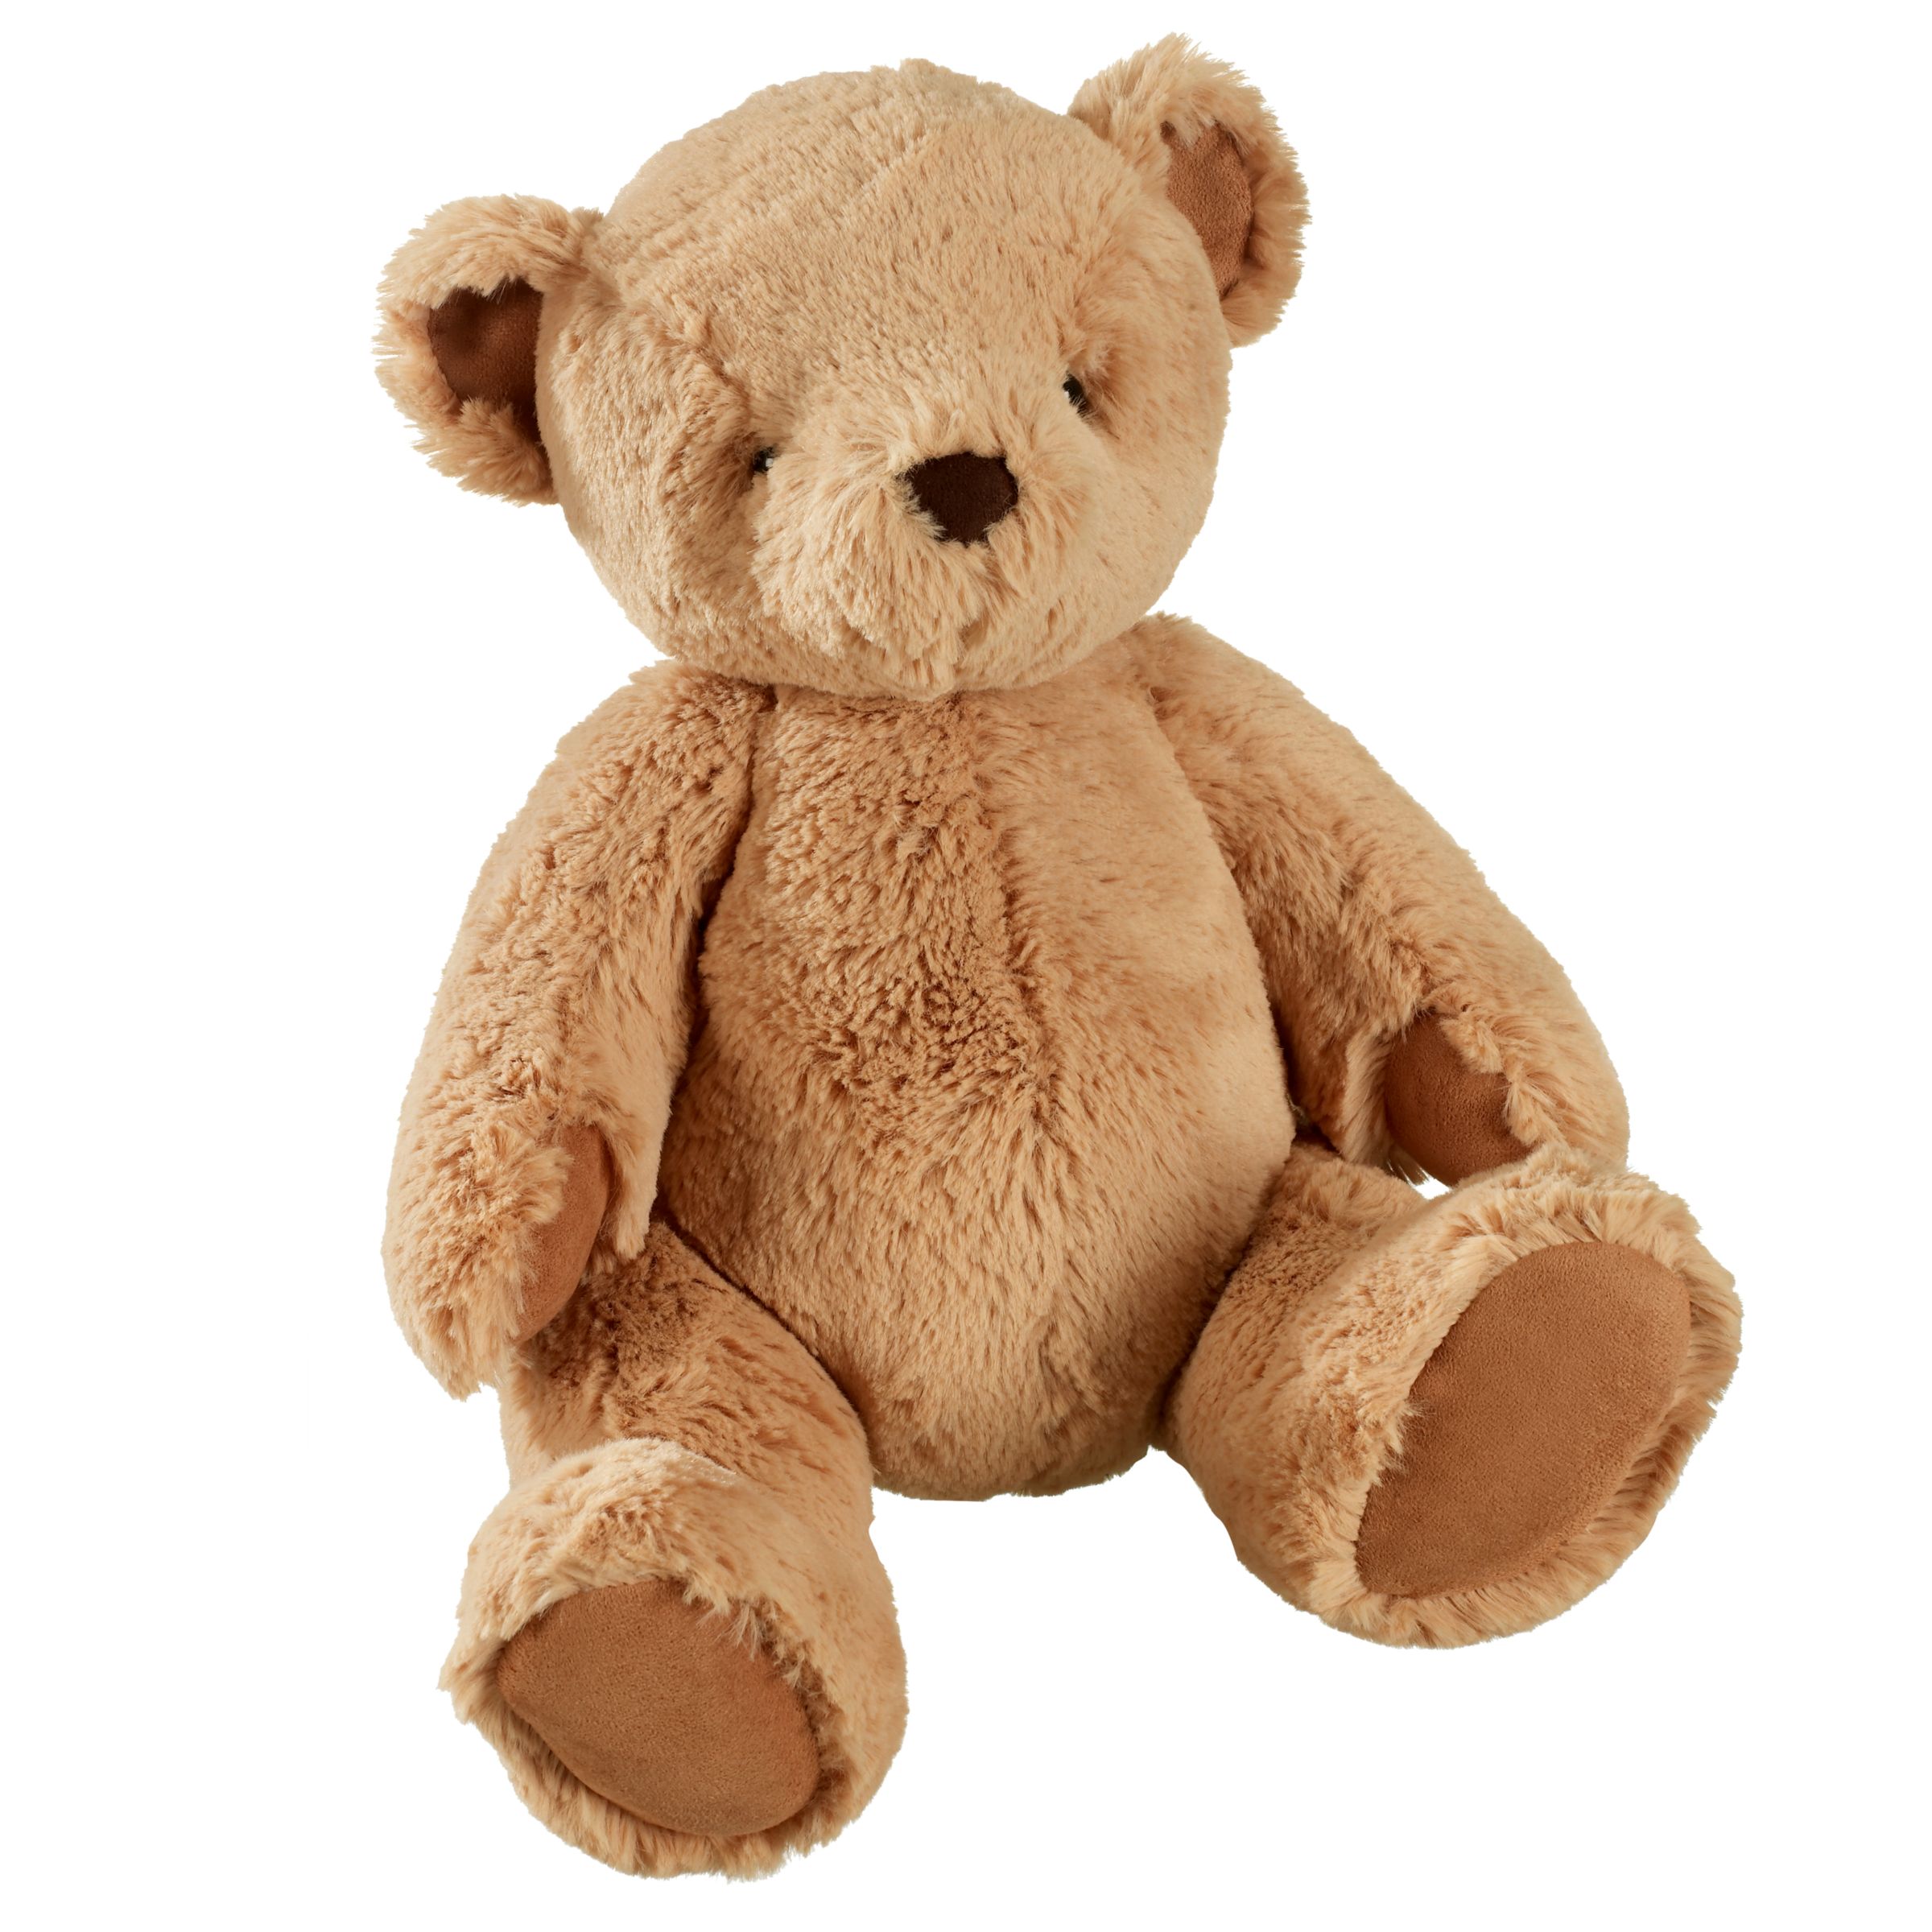 big teddy bear stuffed animal